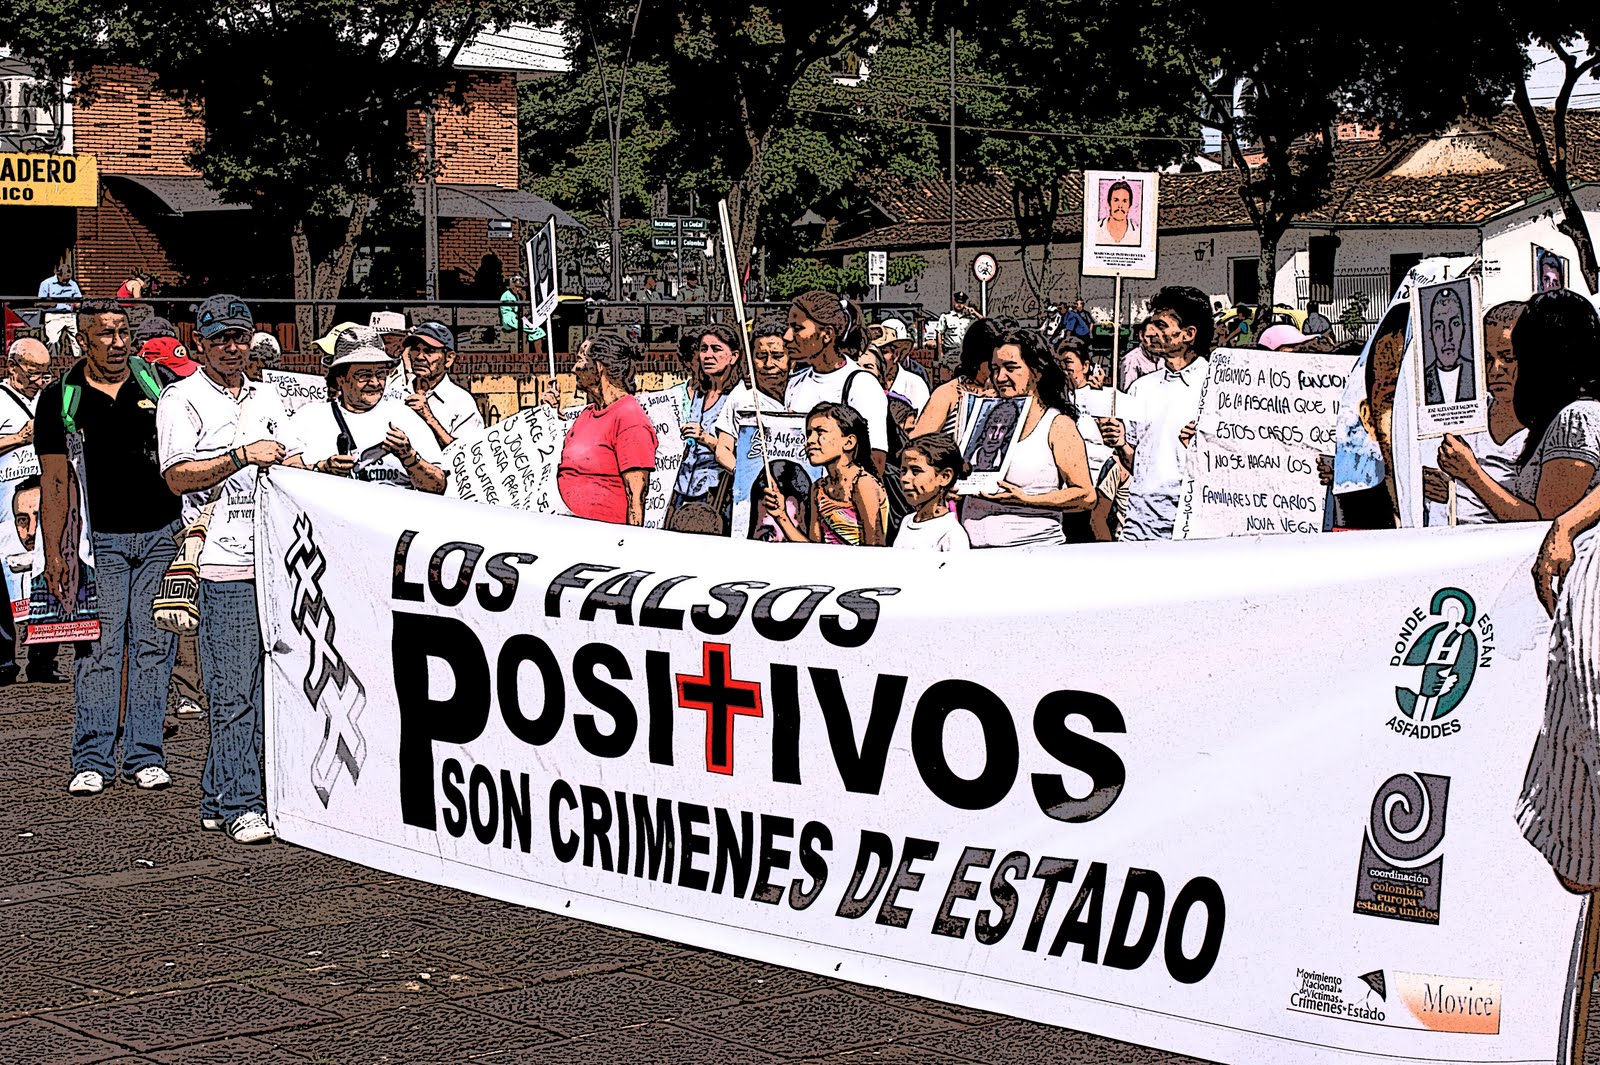 http://geoactivismo.org/wp-content/uploads/2014/12/falsospositivos.jpg